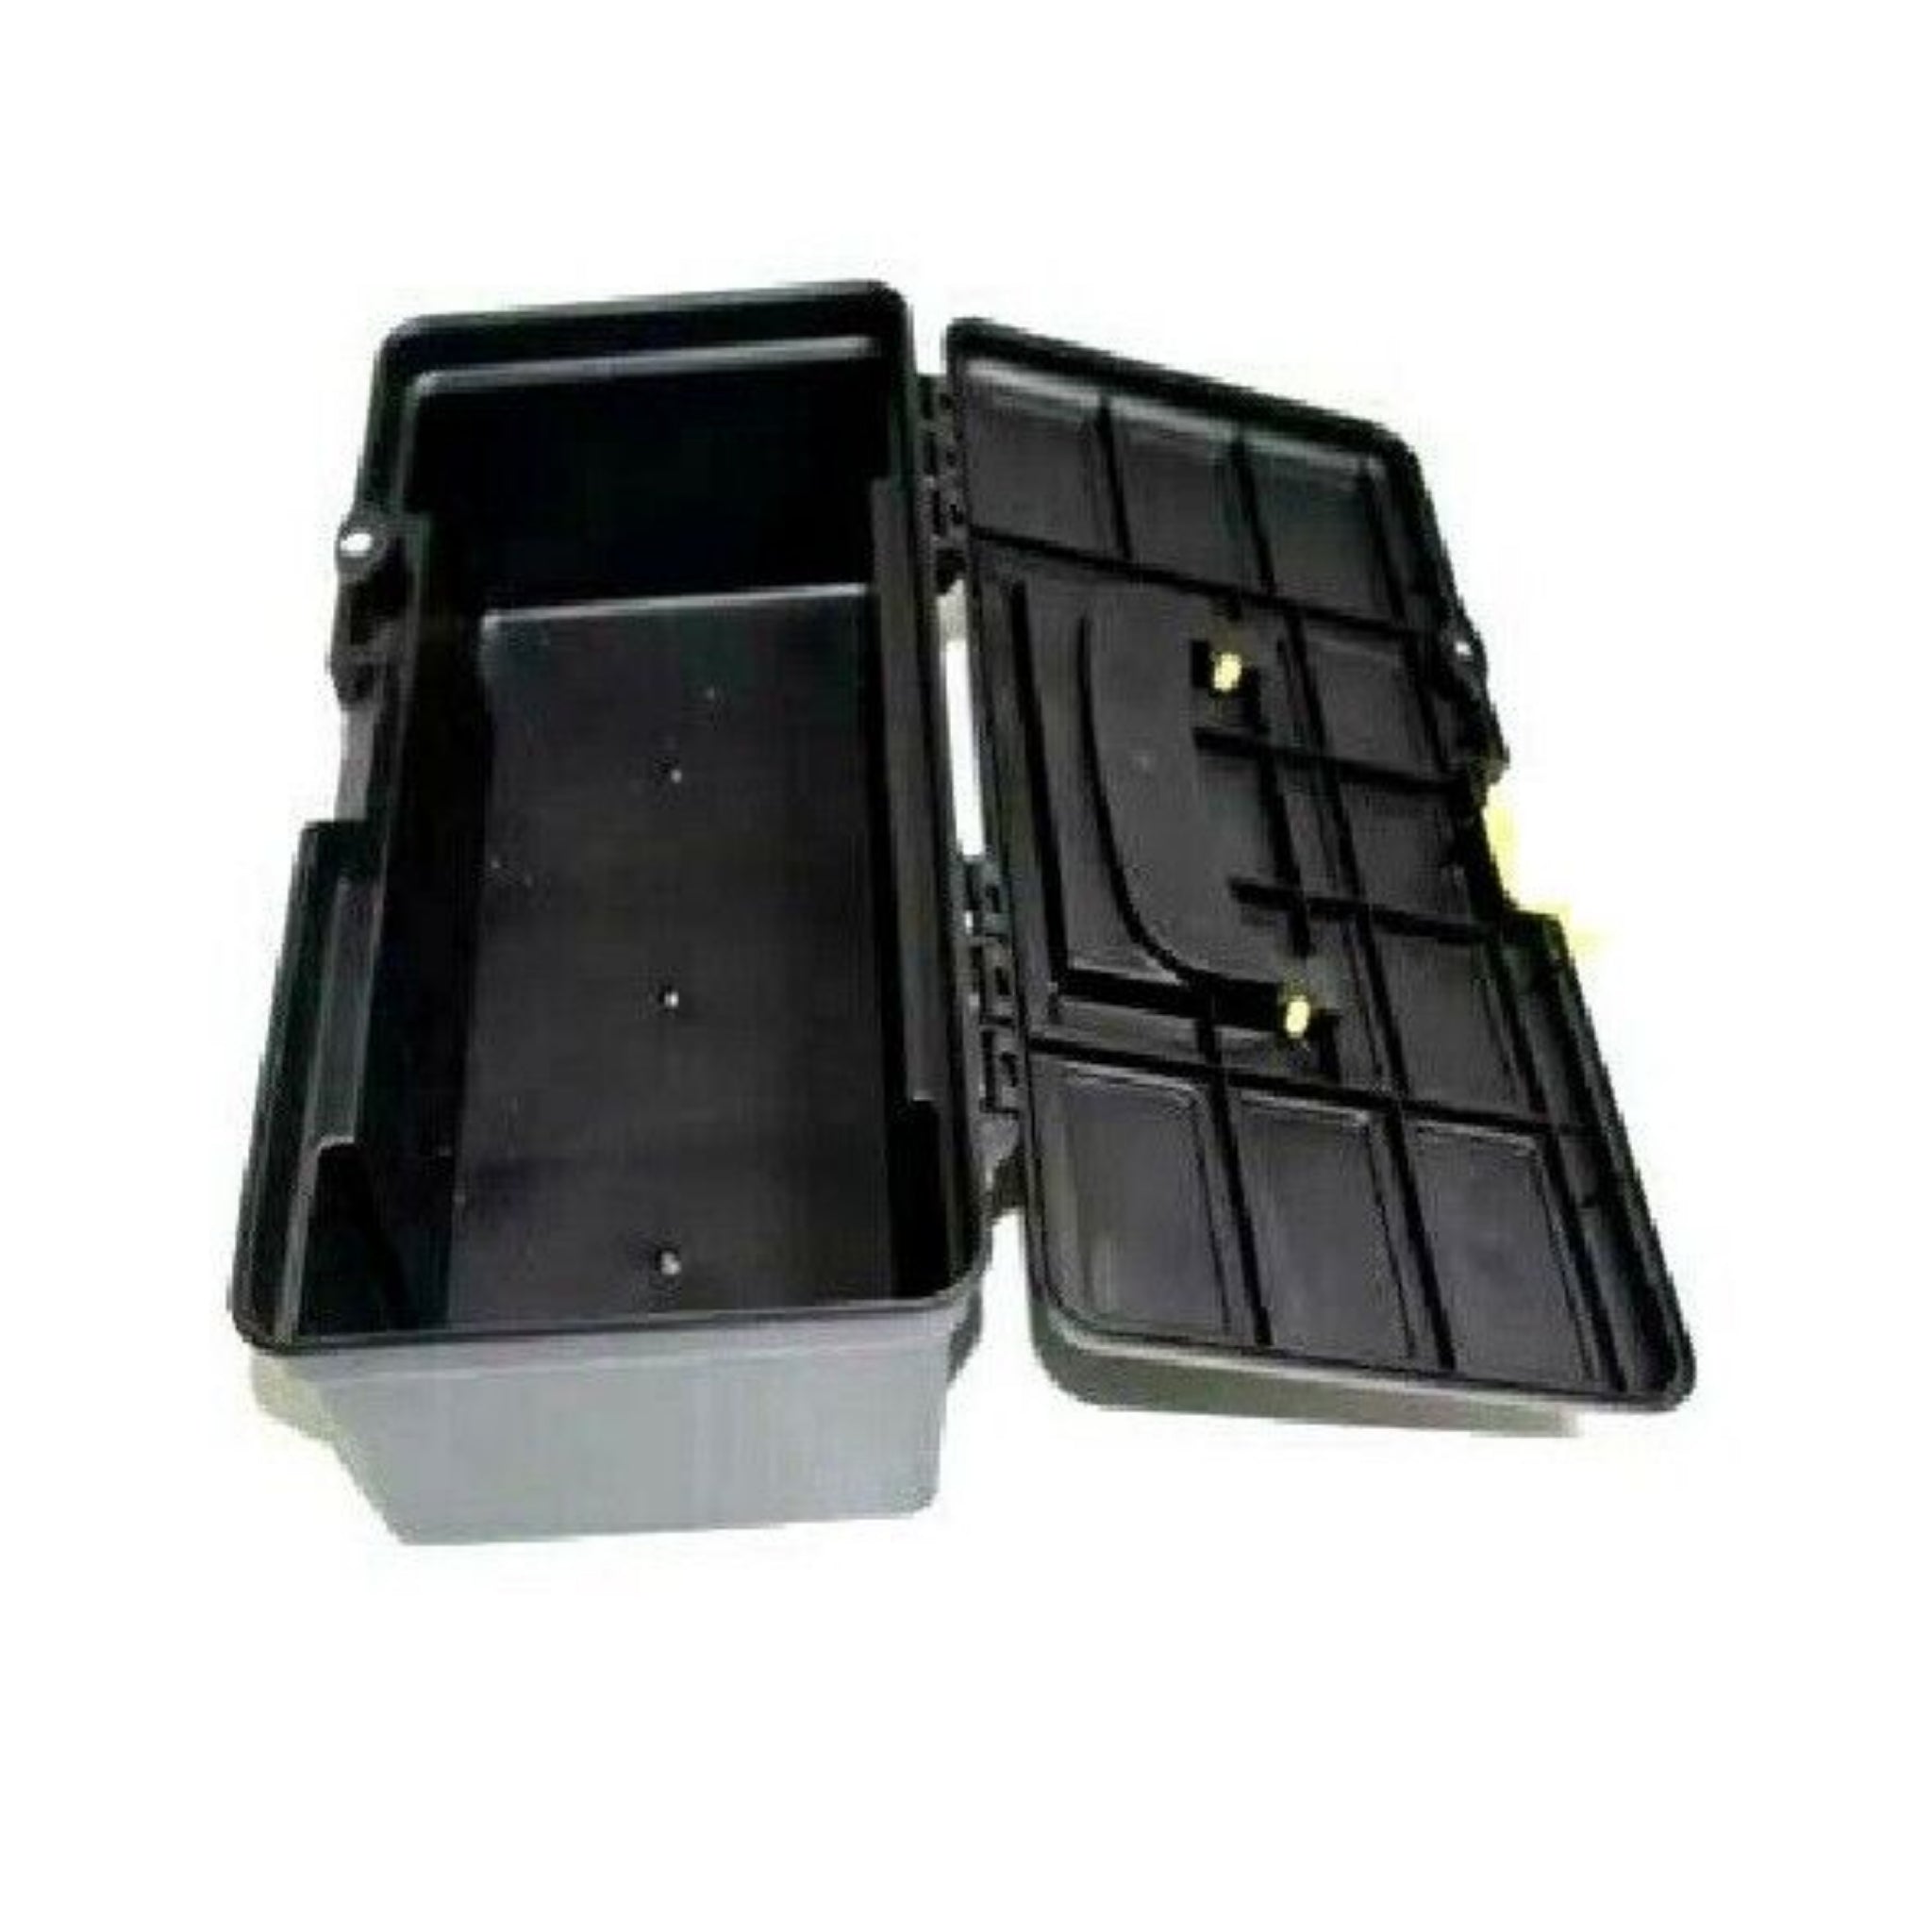 Beclen Harp Portable Mini Toolbox Hand Held Carry Storage Lockable Small Tool Box 10"x 5"x5”